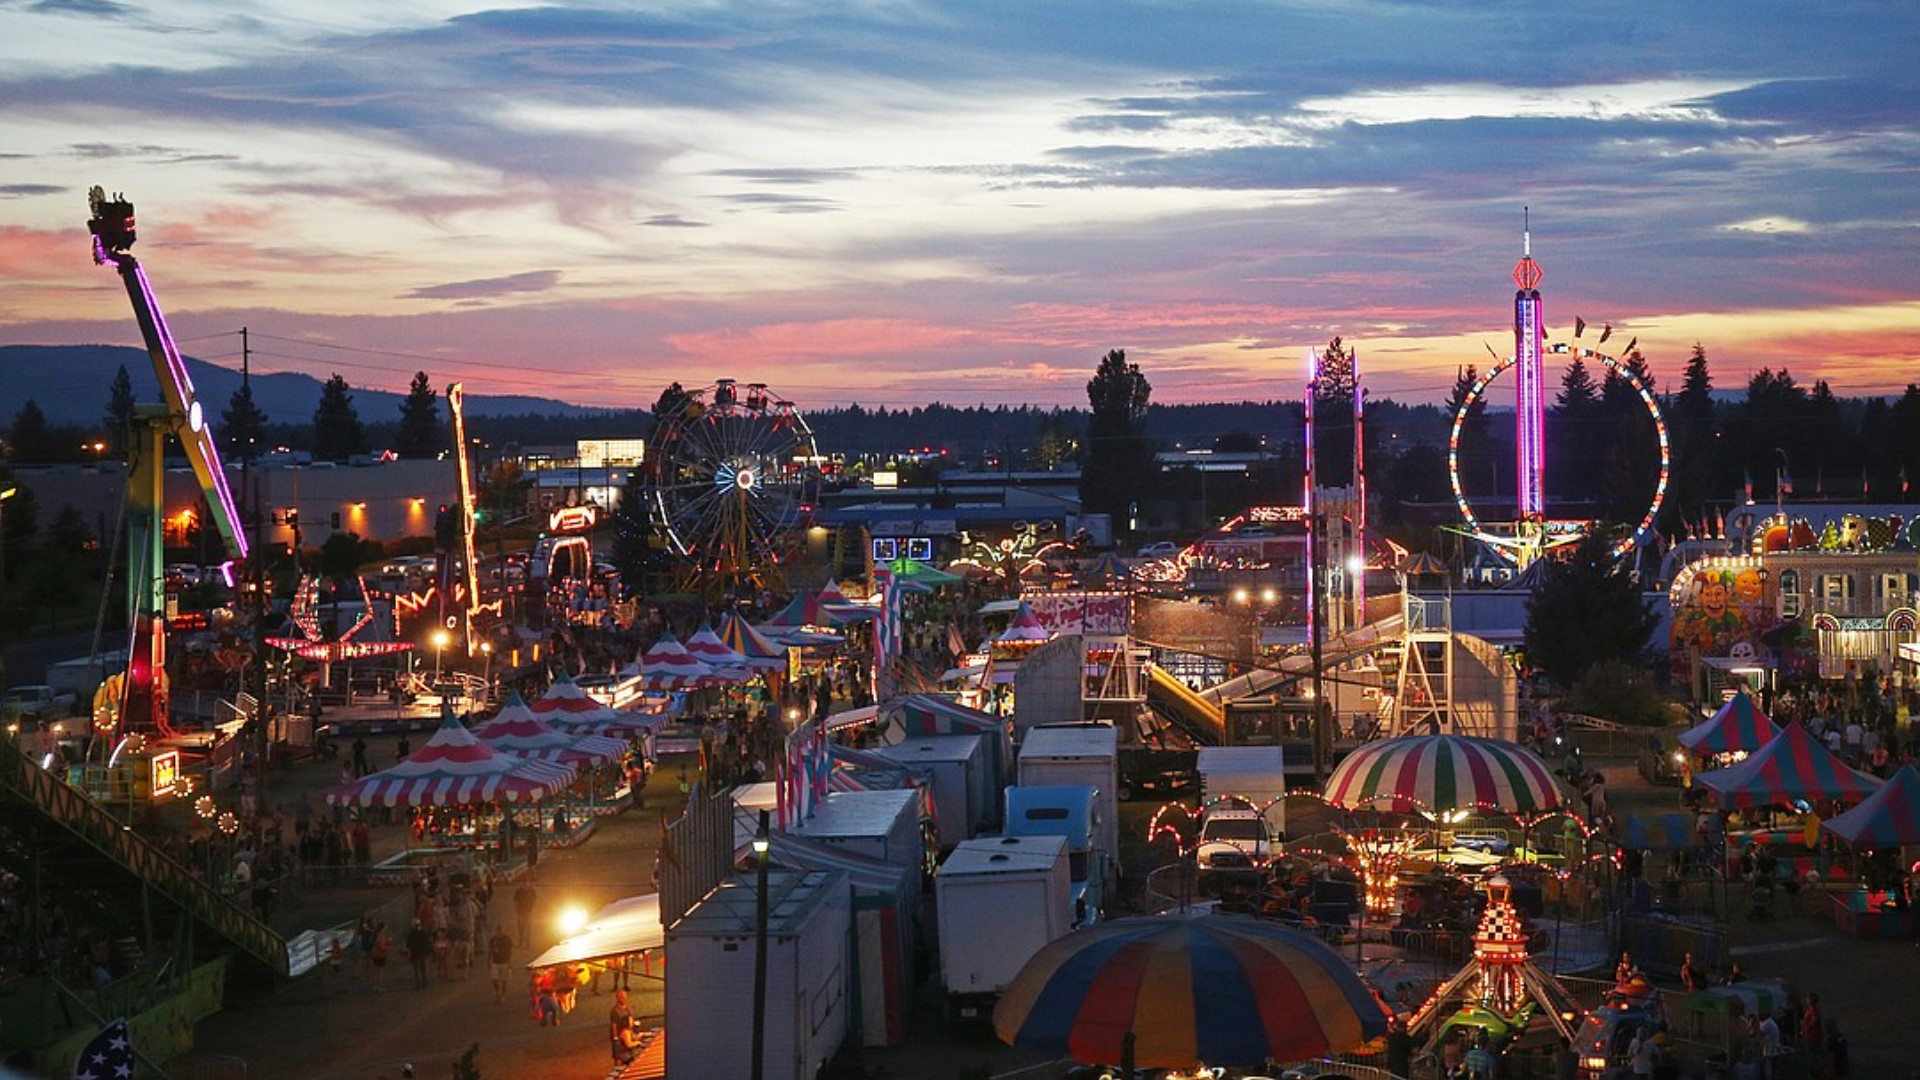 The North Idaho State Fair kicks off on Friday